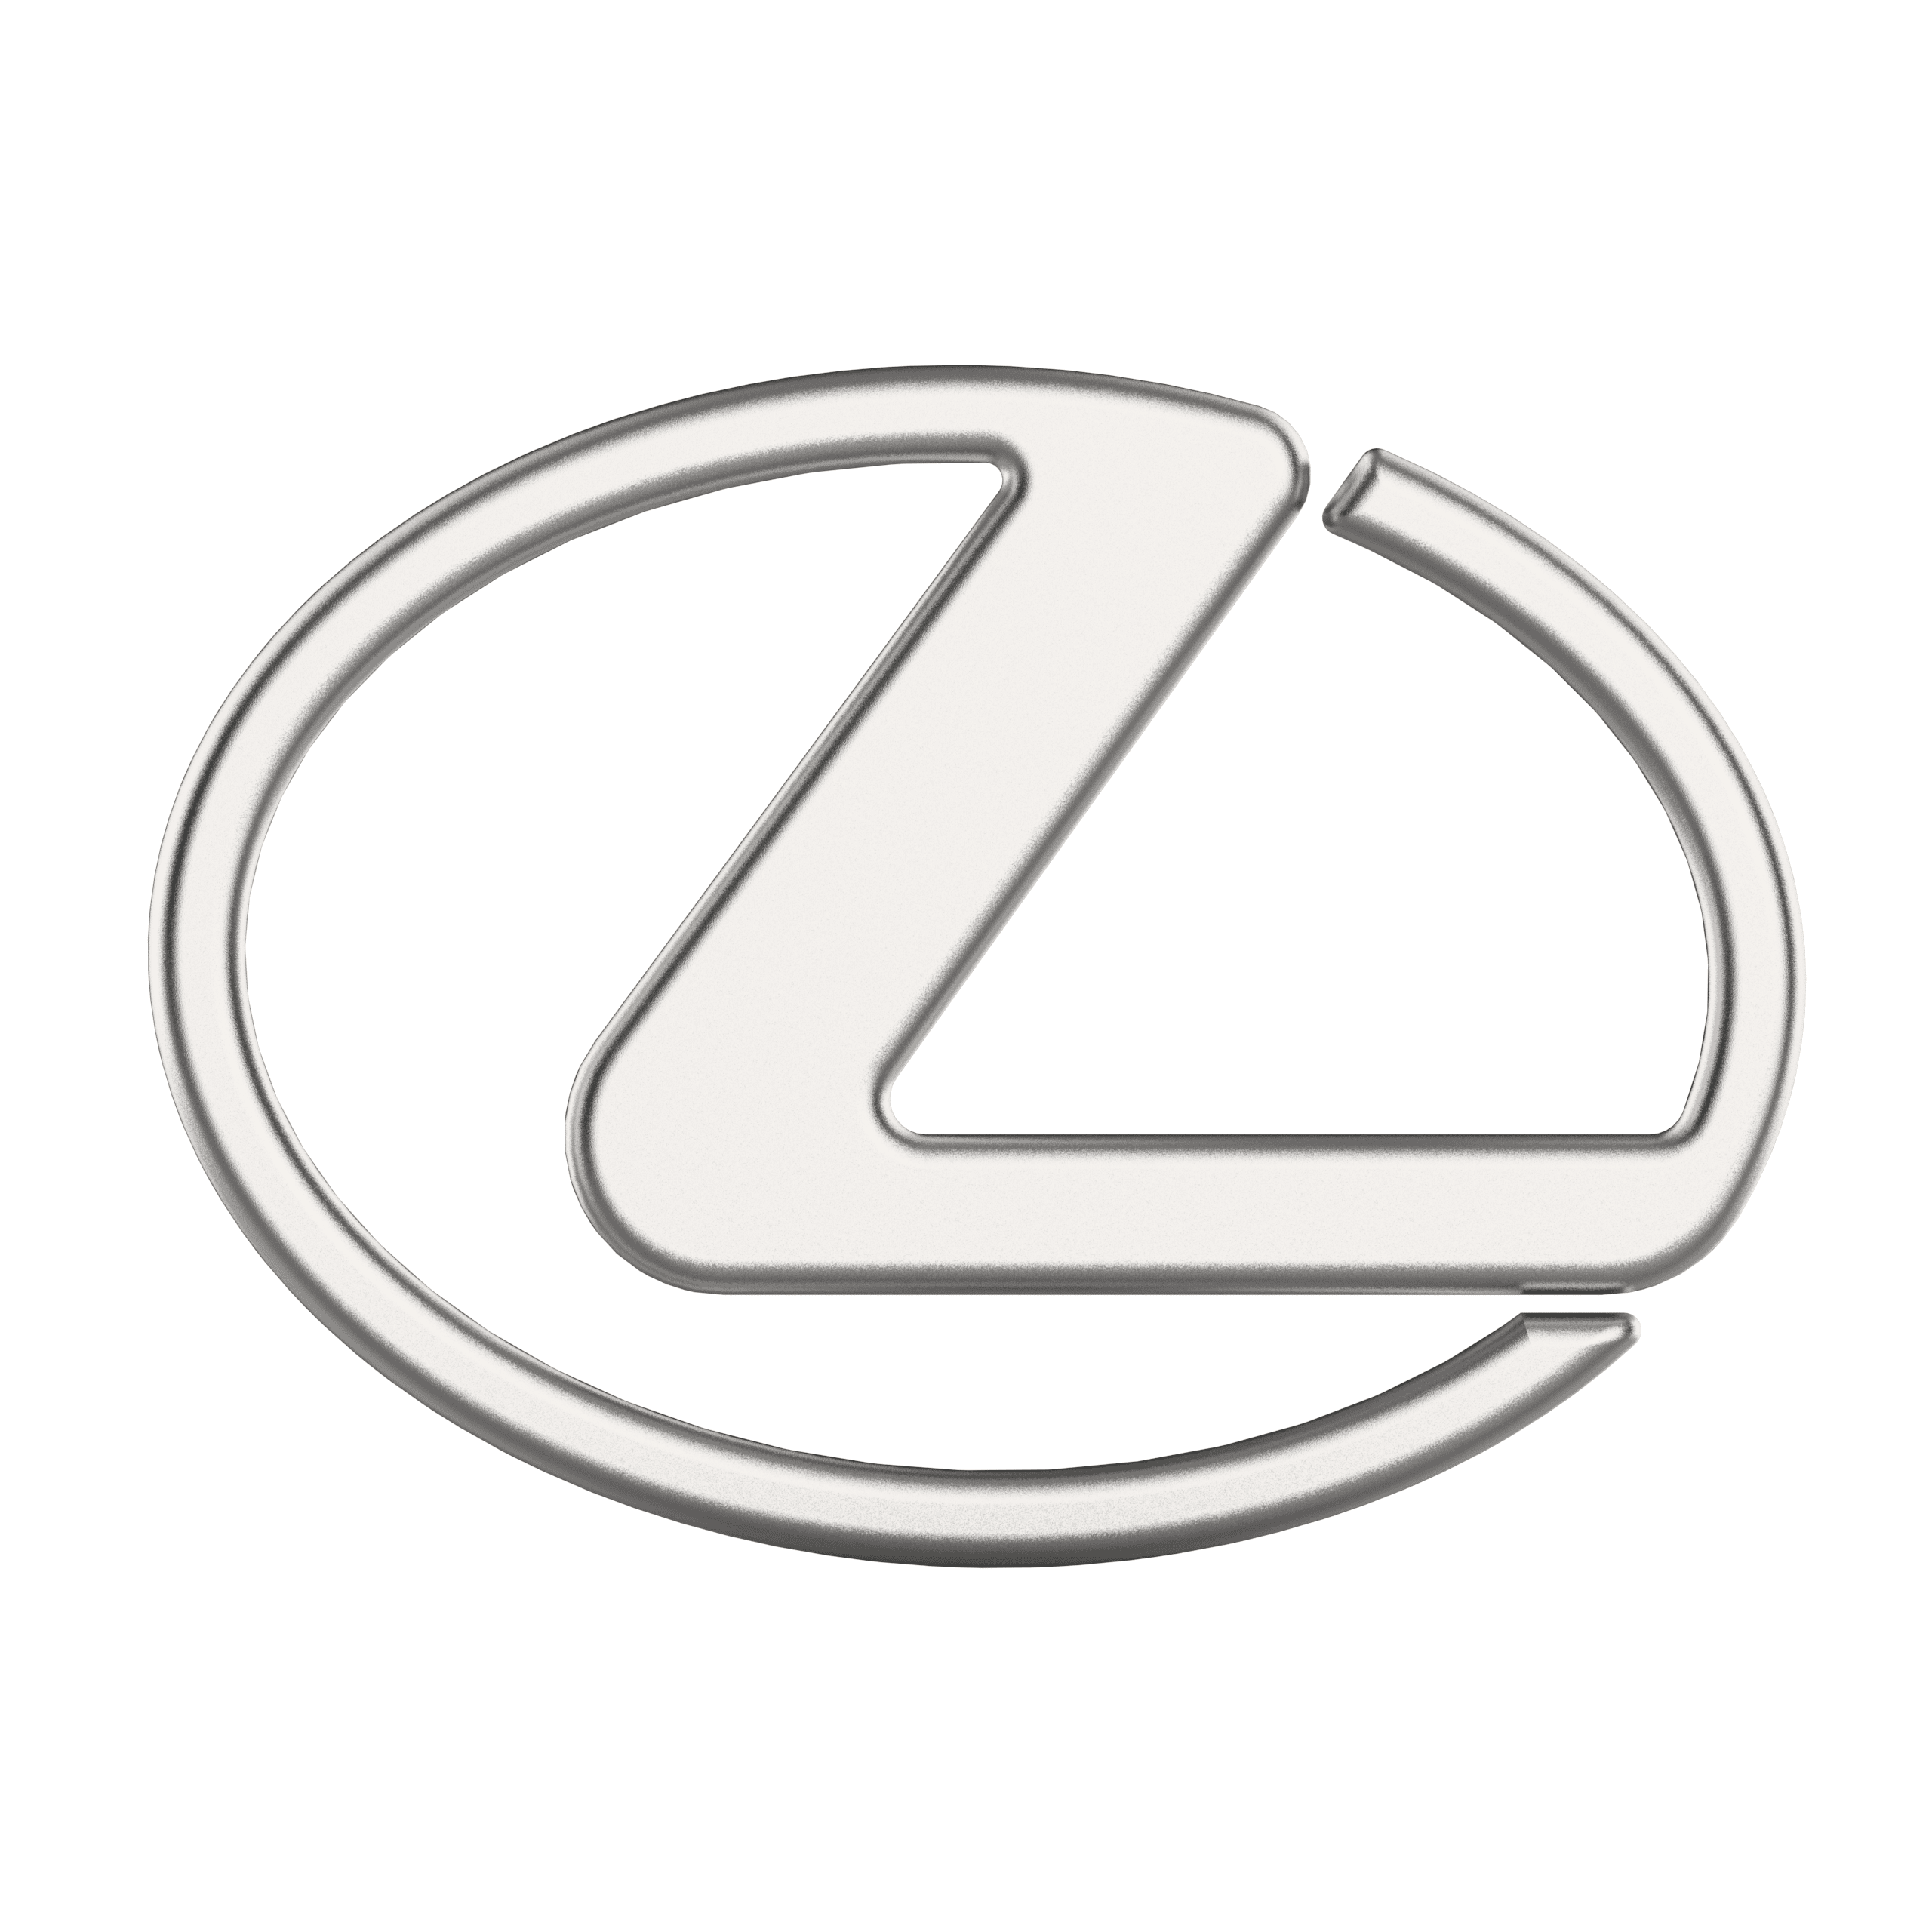 Lexus logo 3d model